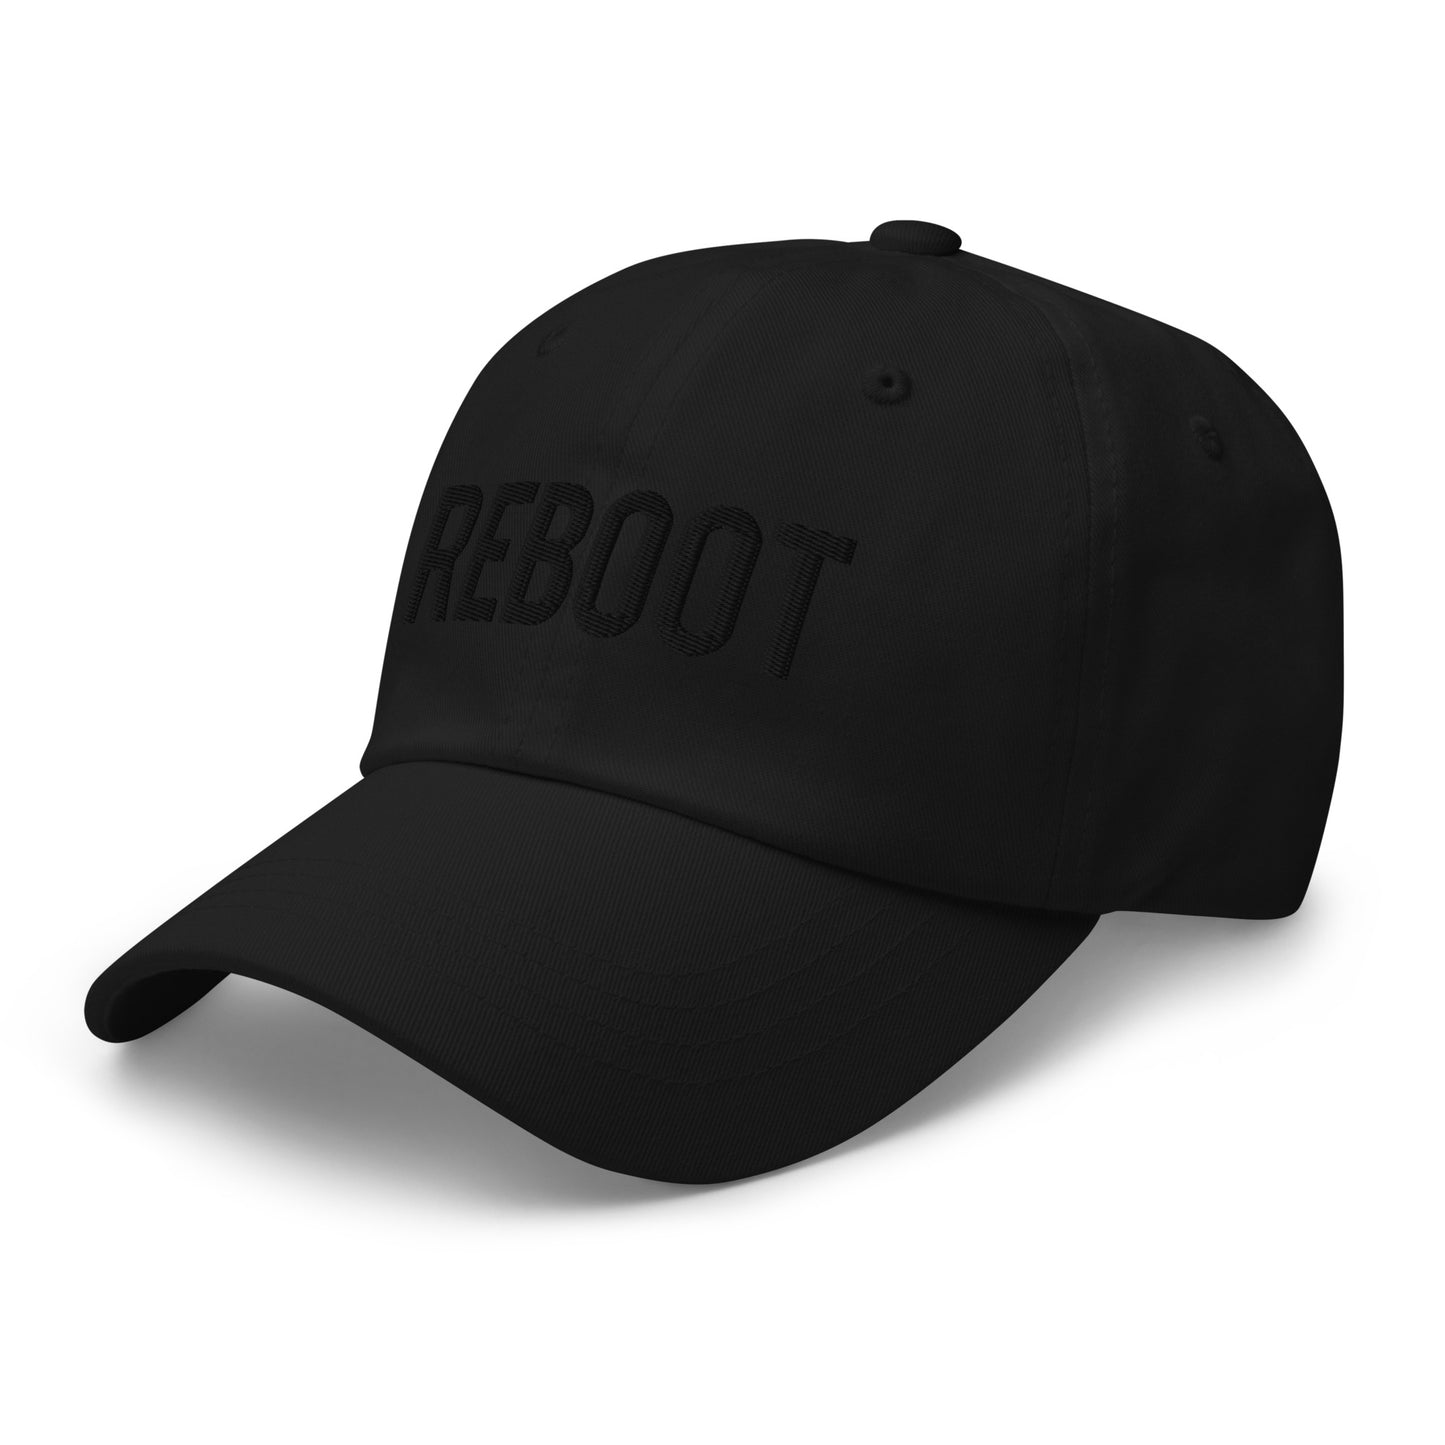 REBOOT Black Dad hat